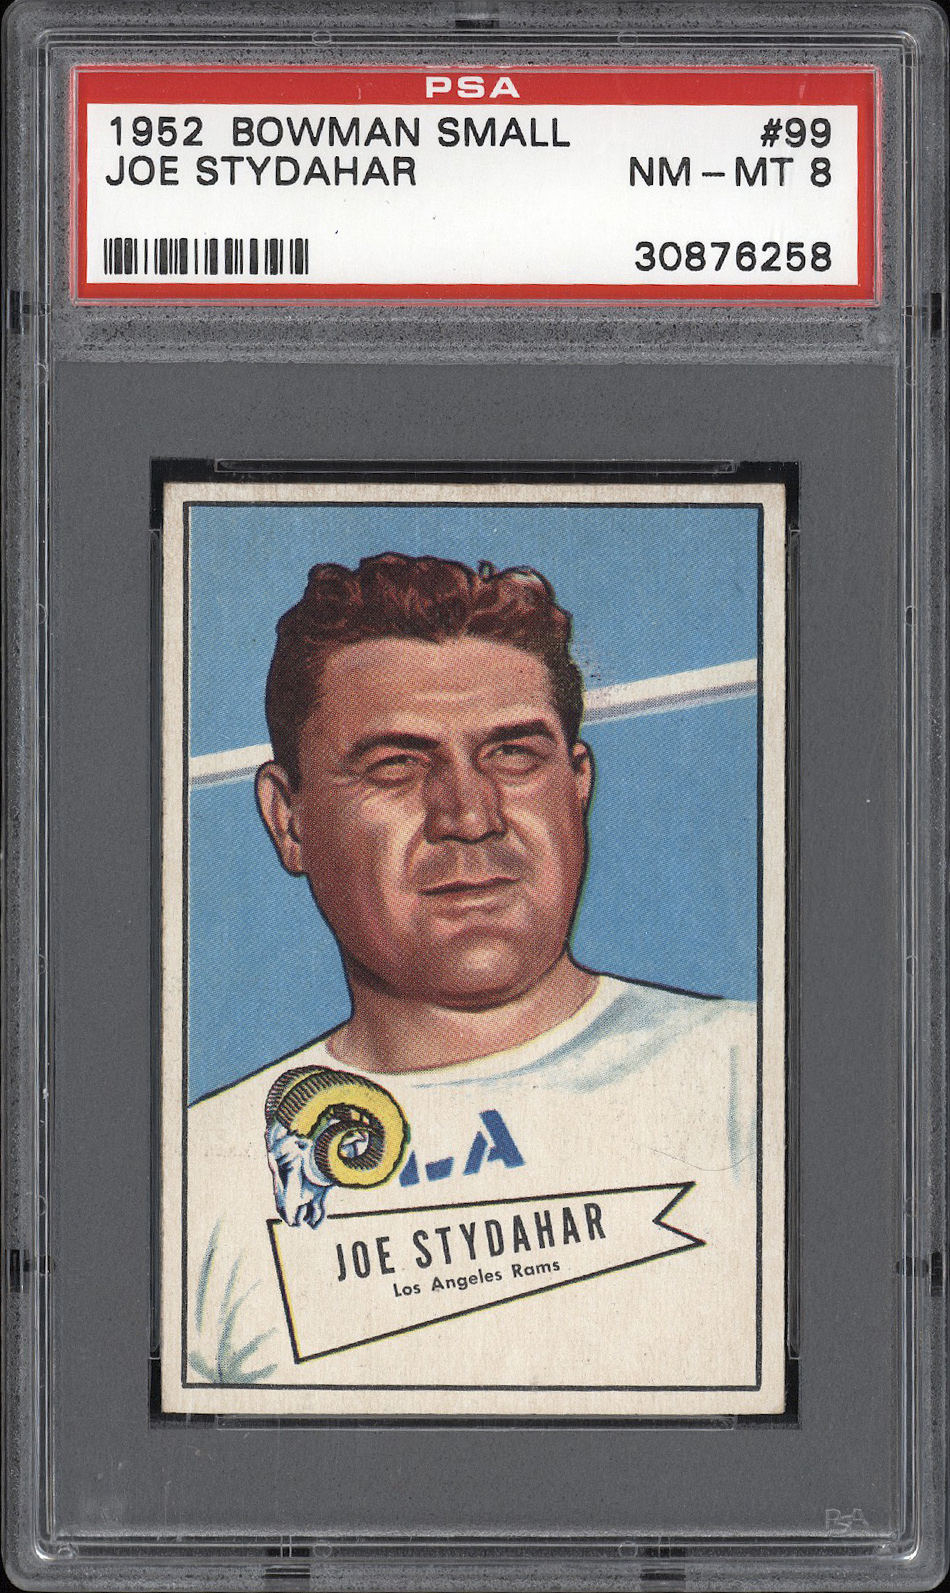  1952 Bowman Small #99 Joe Stydahar (HOF RC) - PSA NM-MT 8 - 1/7  Just 1 Higher!